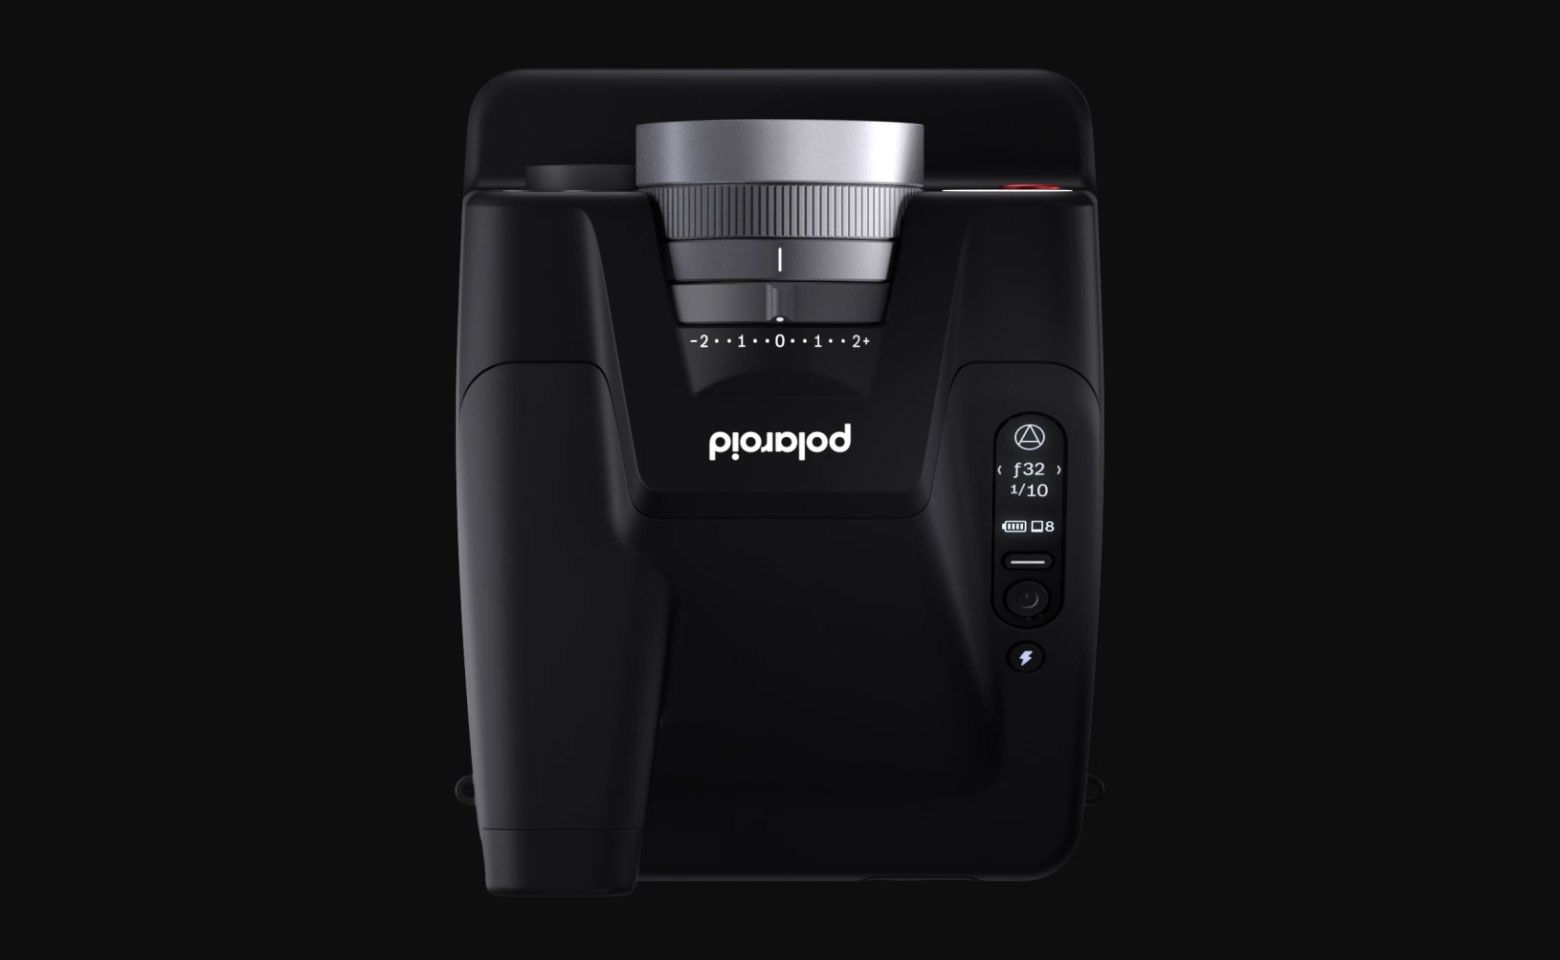  Polaroid I-2 - Paquete de cámara instantánea con película tipo  I a color (16 fotos) - Control manual completo, cámara instantánea  analógica habilitada con aplicación con la lente de 3 elementos más :  Electrónica